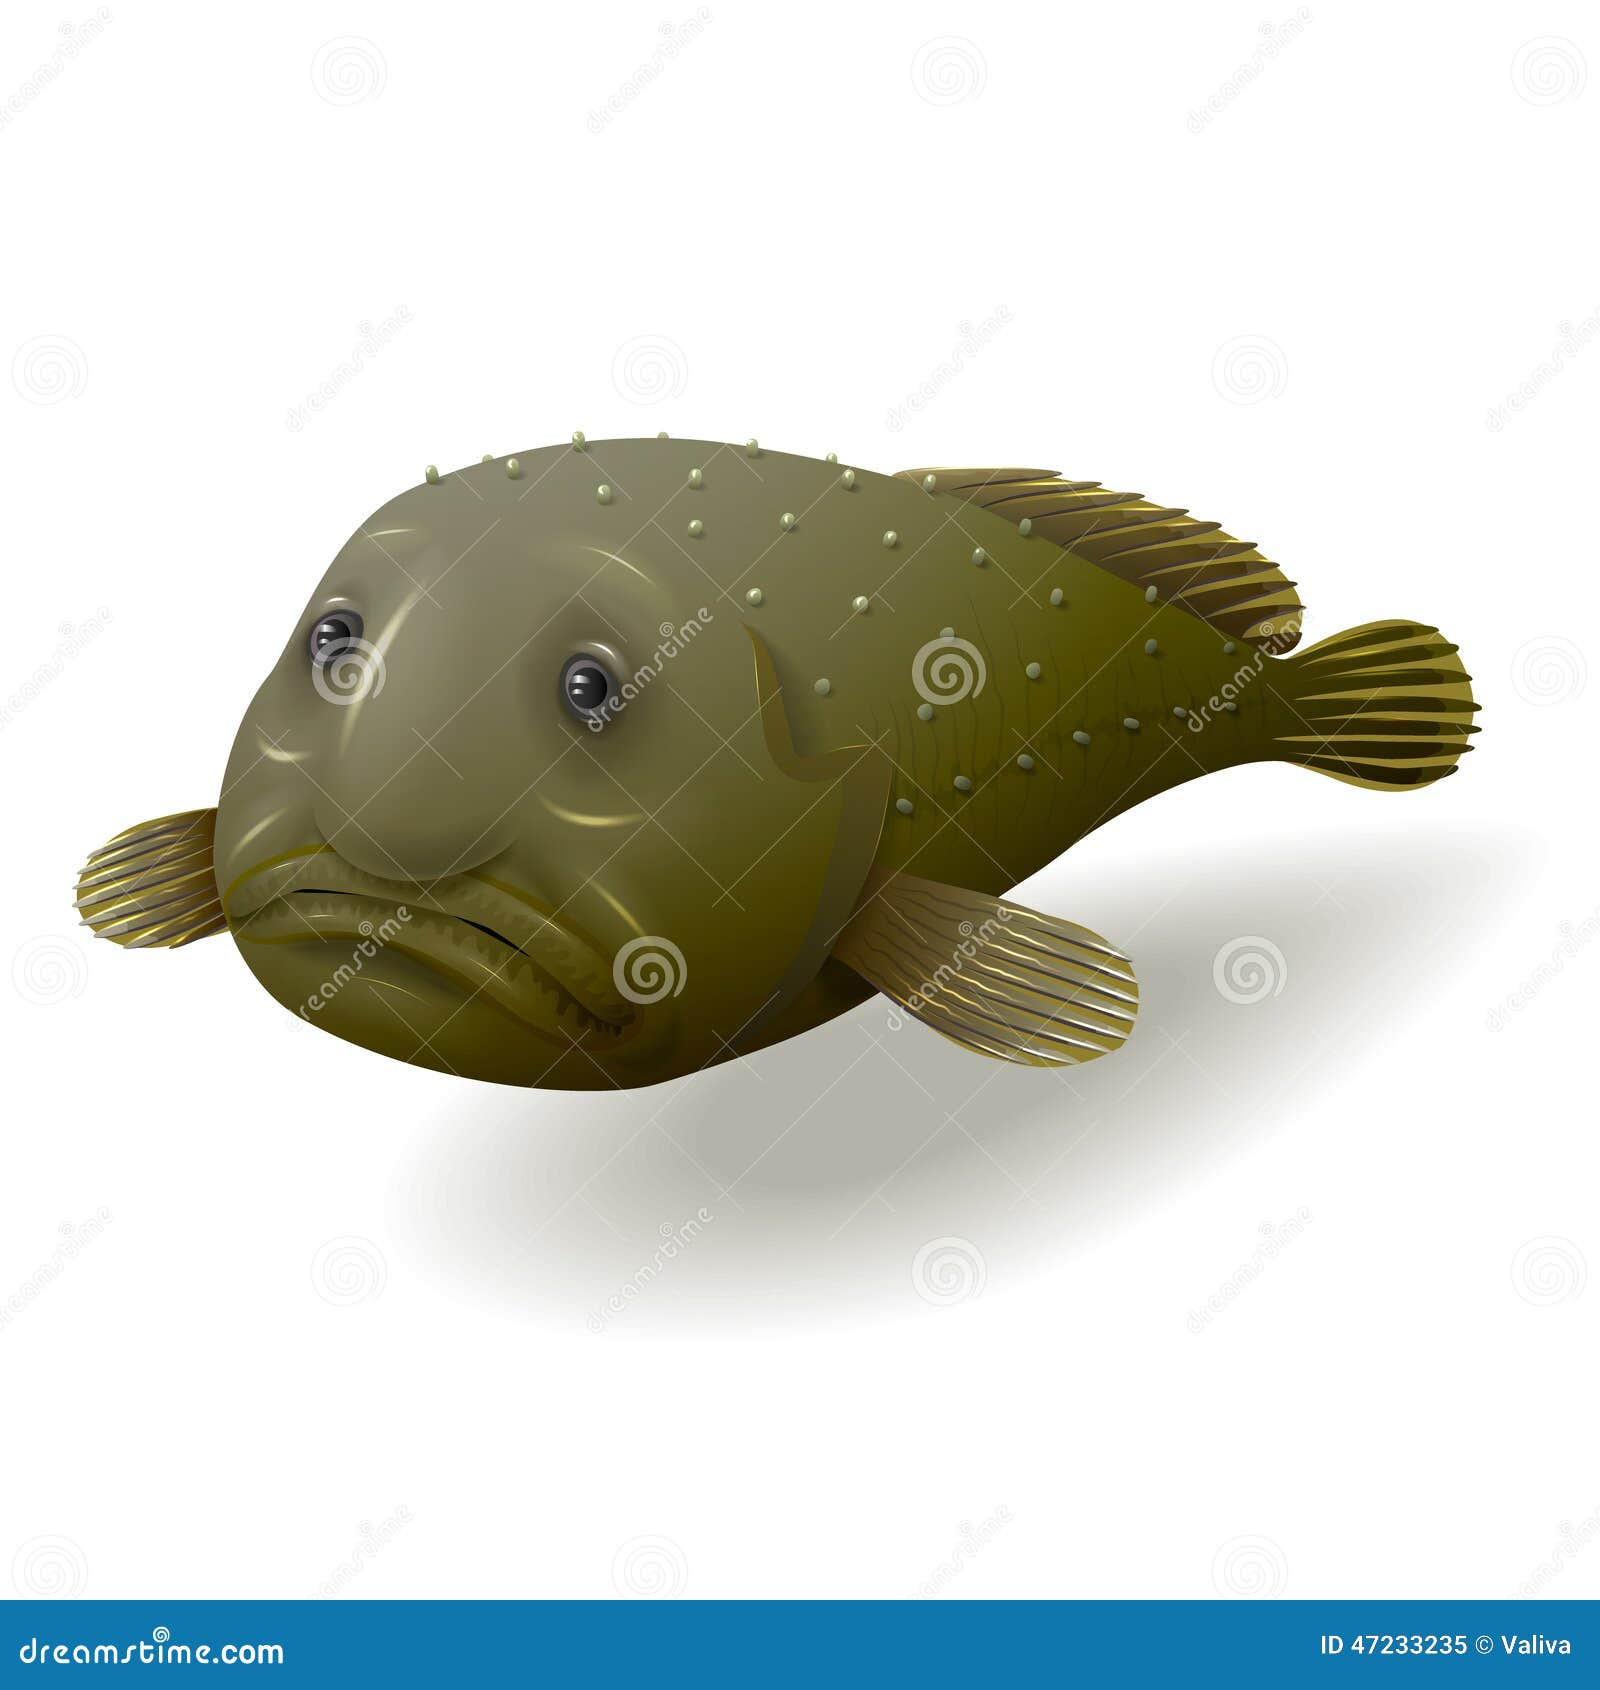 blobfish.  Blobfish, Blob fish in water, Real sea monsters